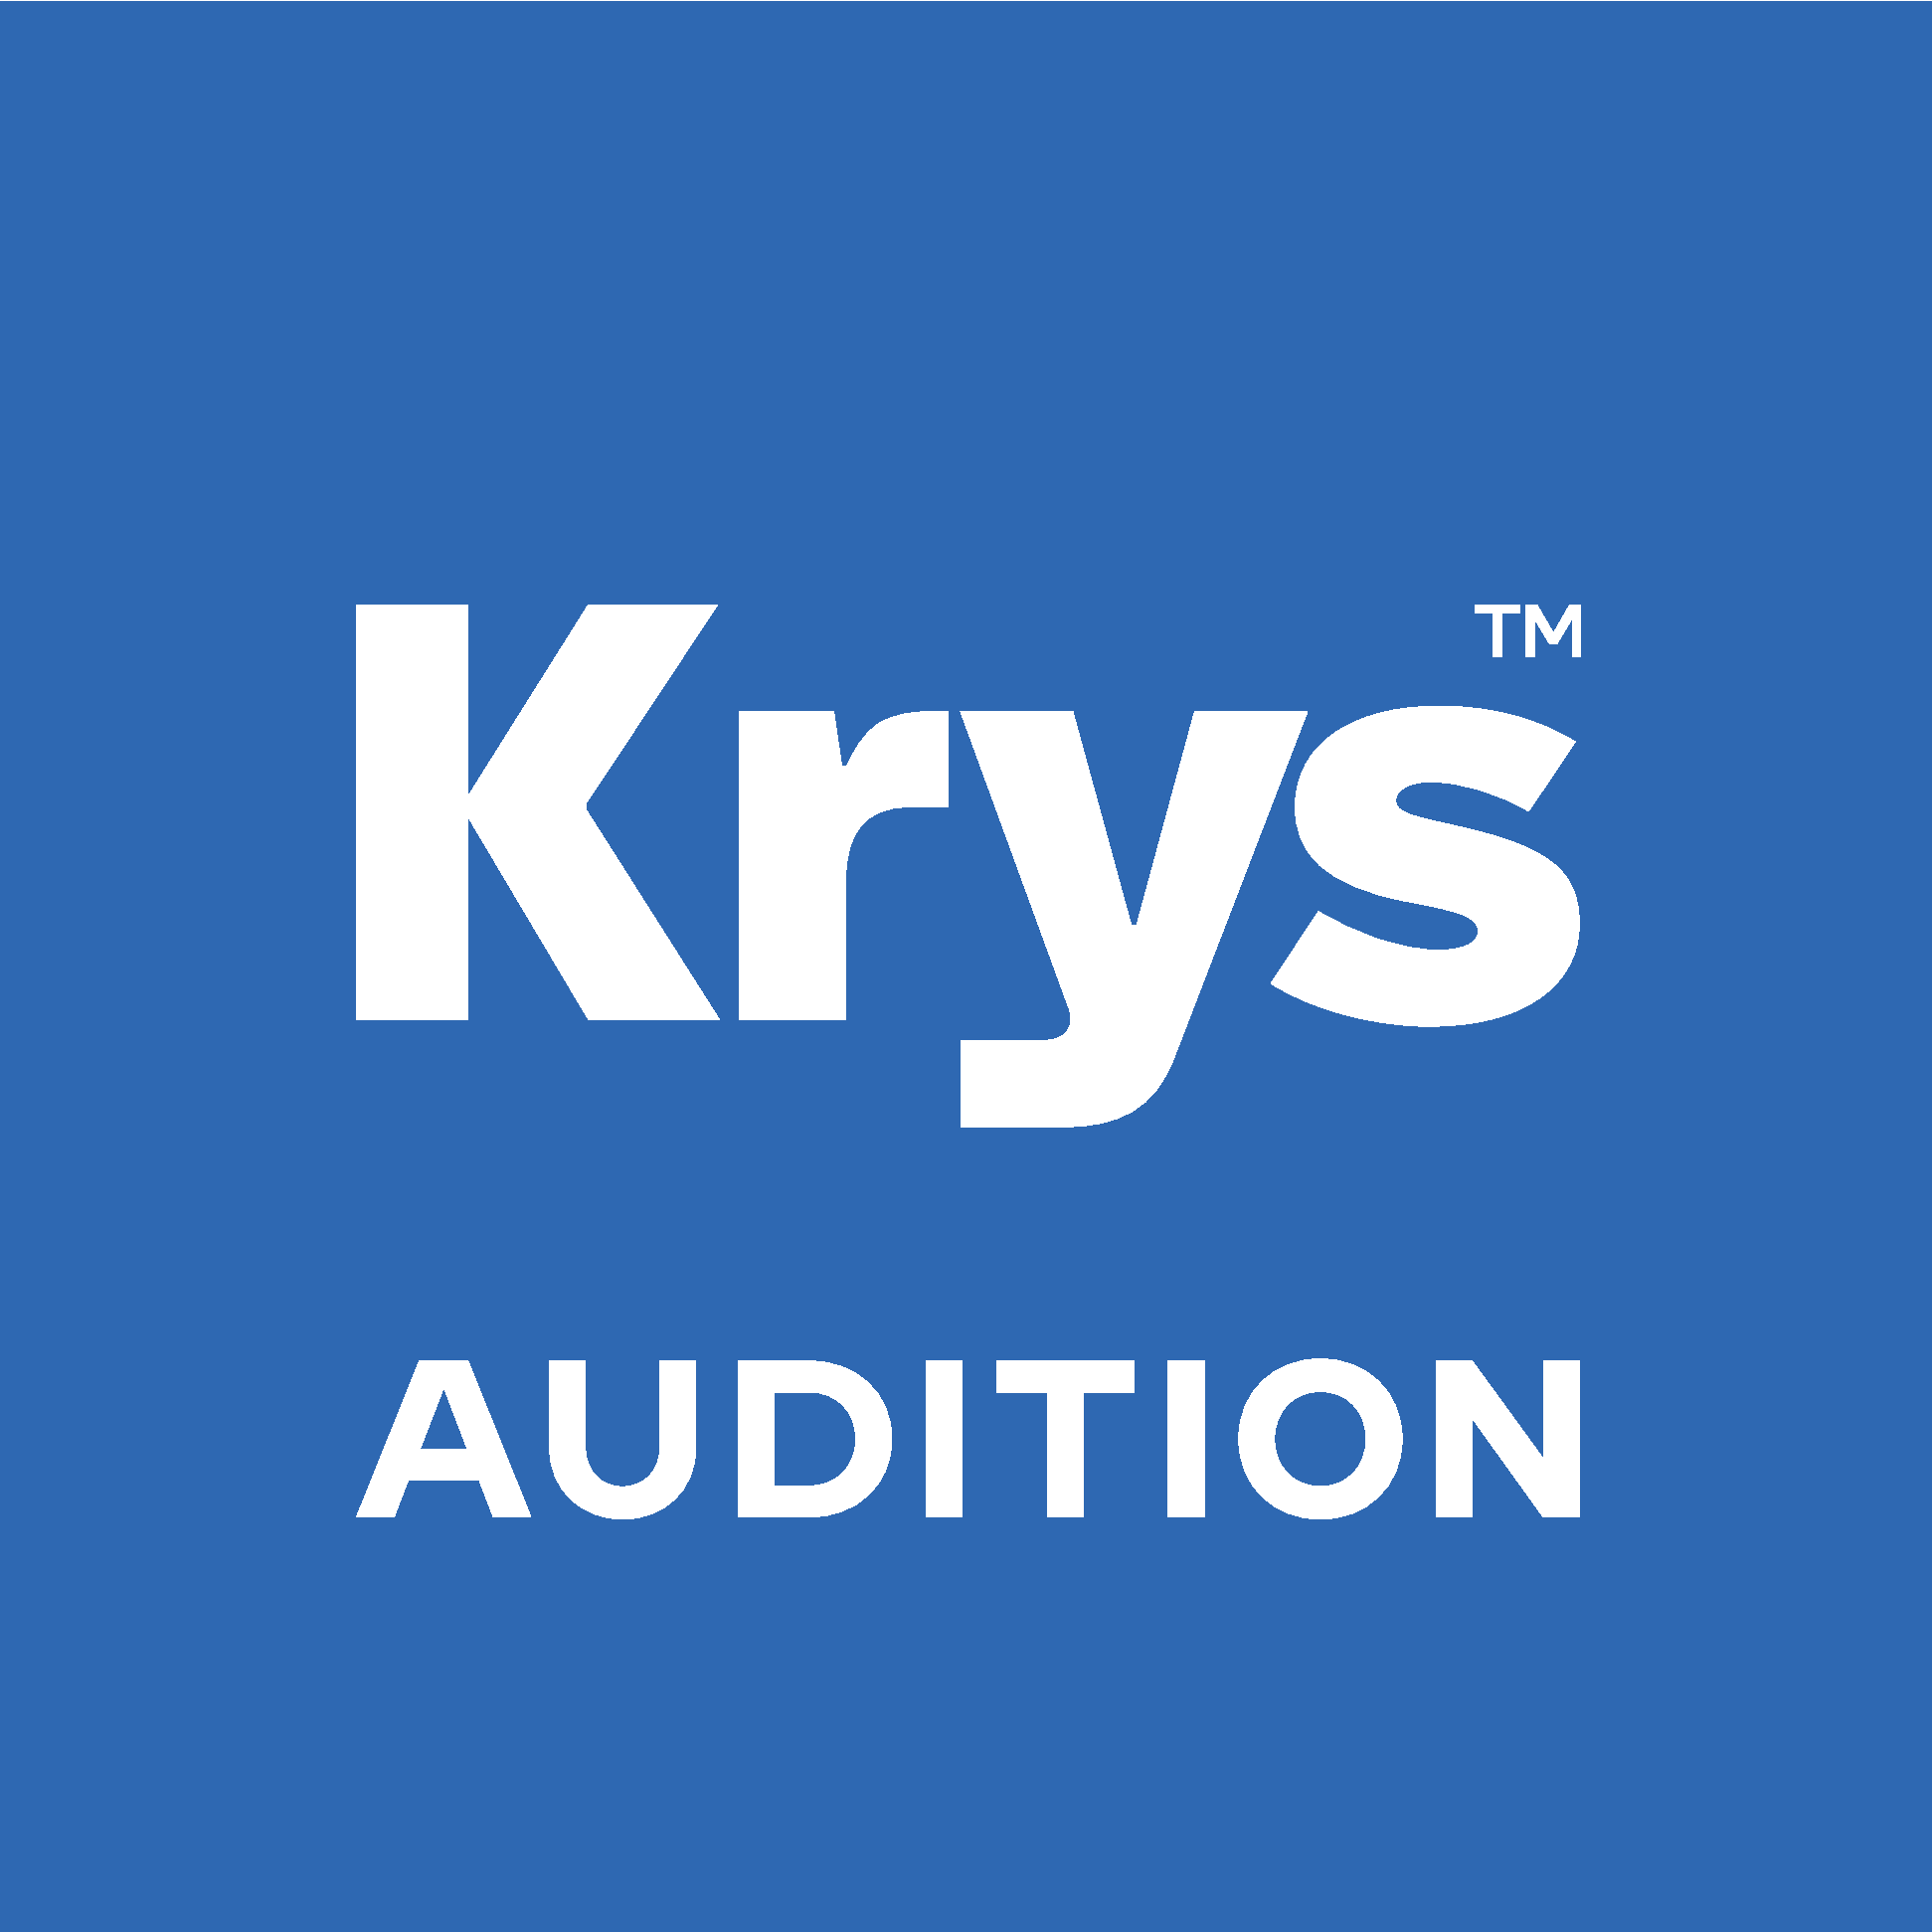 Audioprothésiste Krys Audition - Hearing Aid Store - Corbie - 03 52 79 01 77 France | ShowMeLocal.com